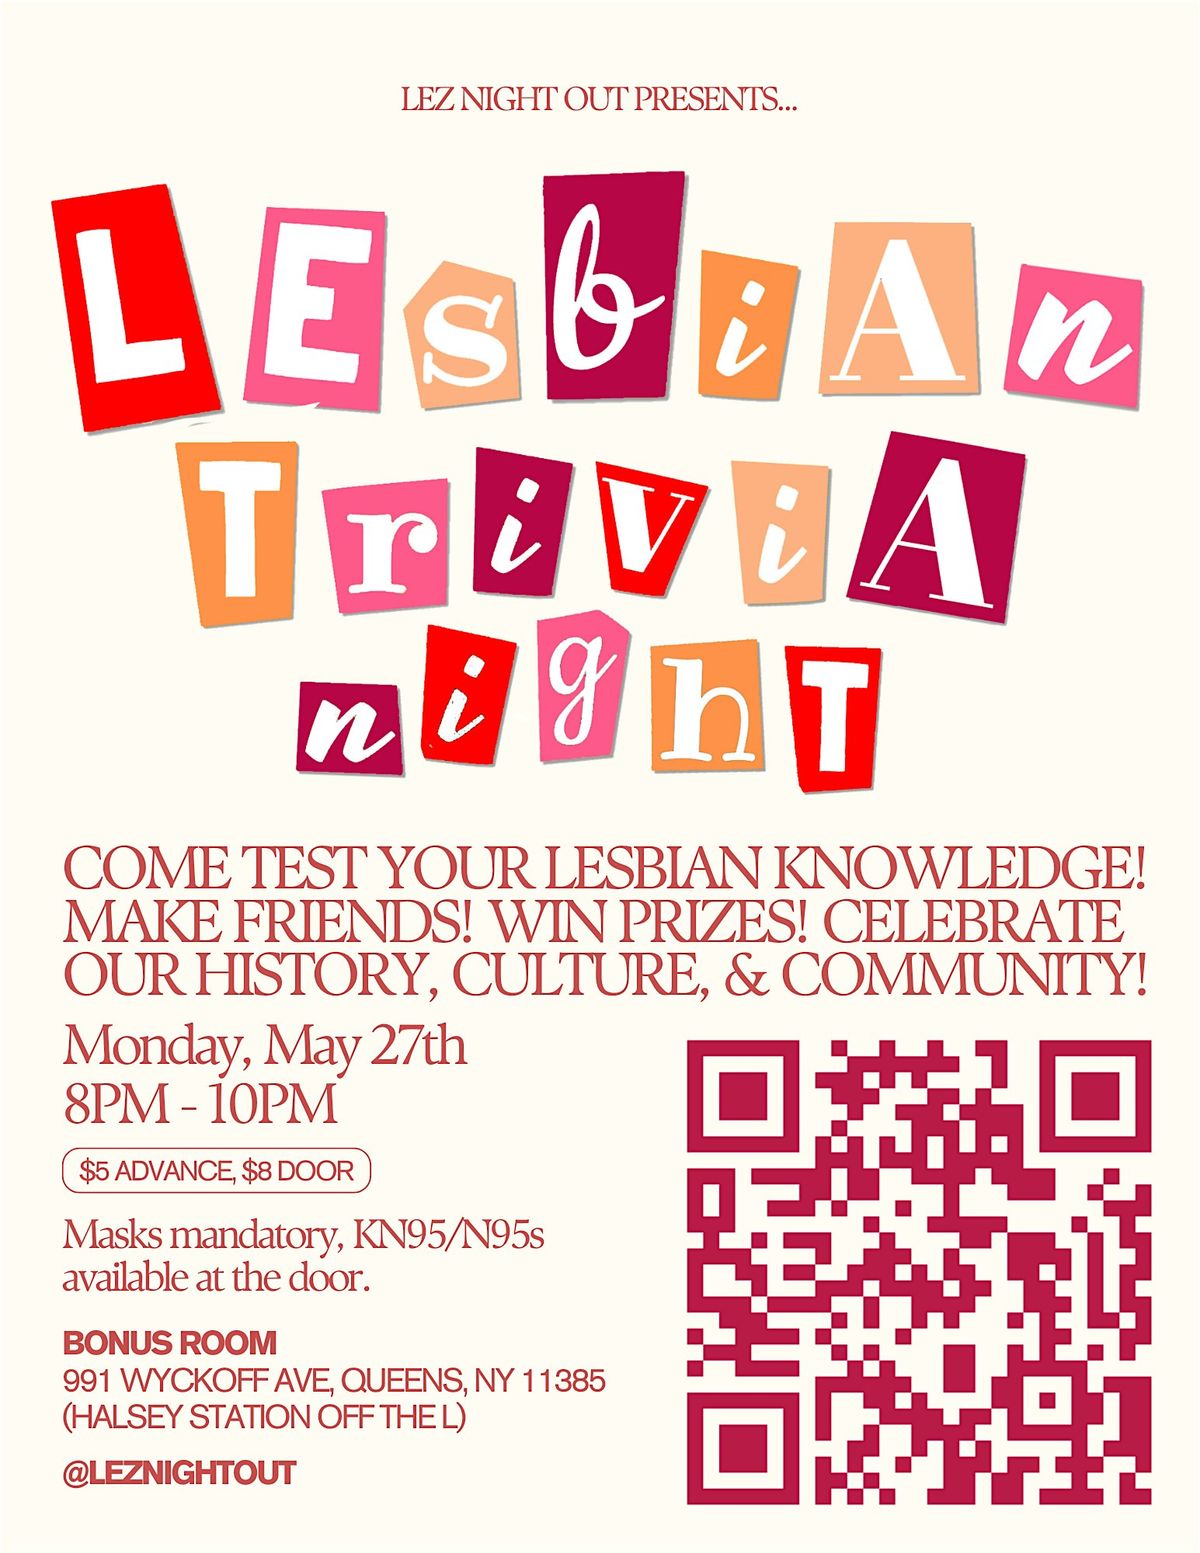 Lesbian Trivia Night @ The Bush